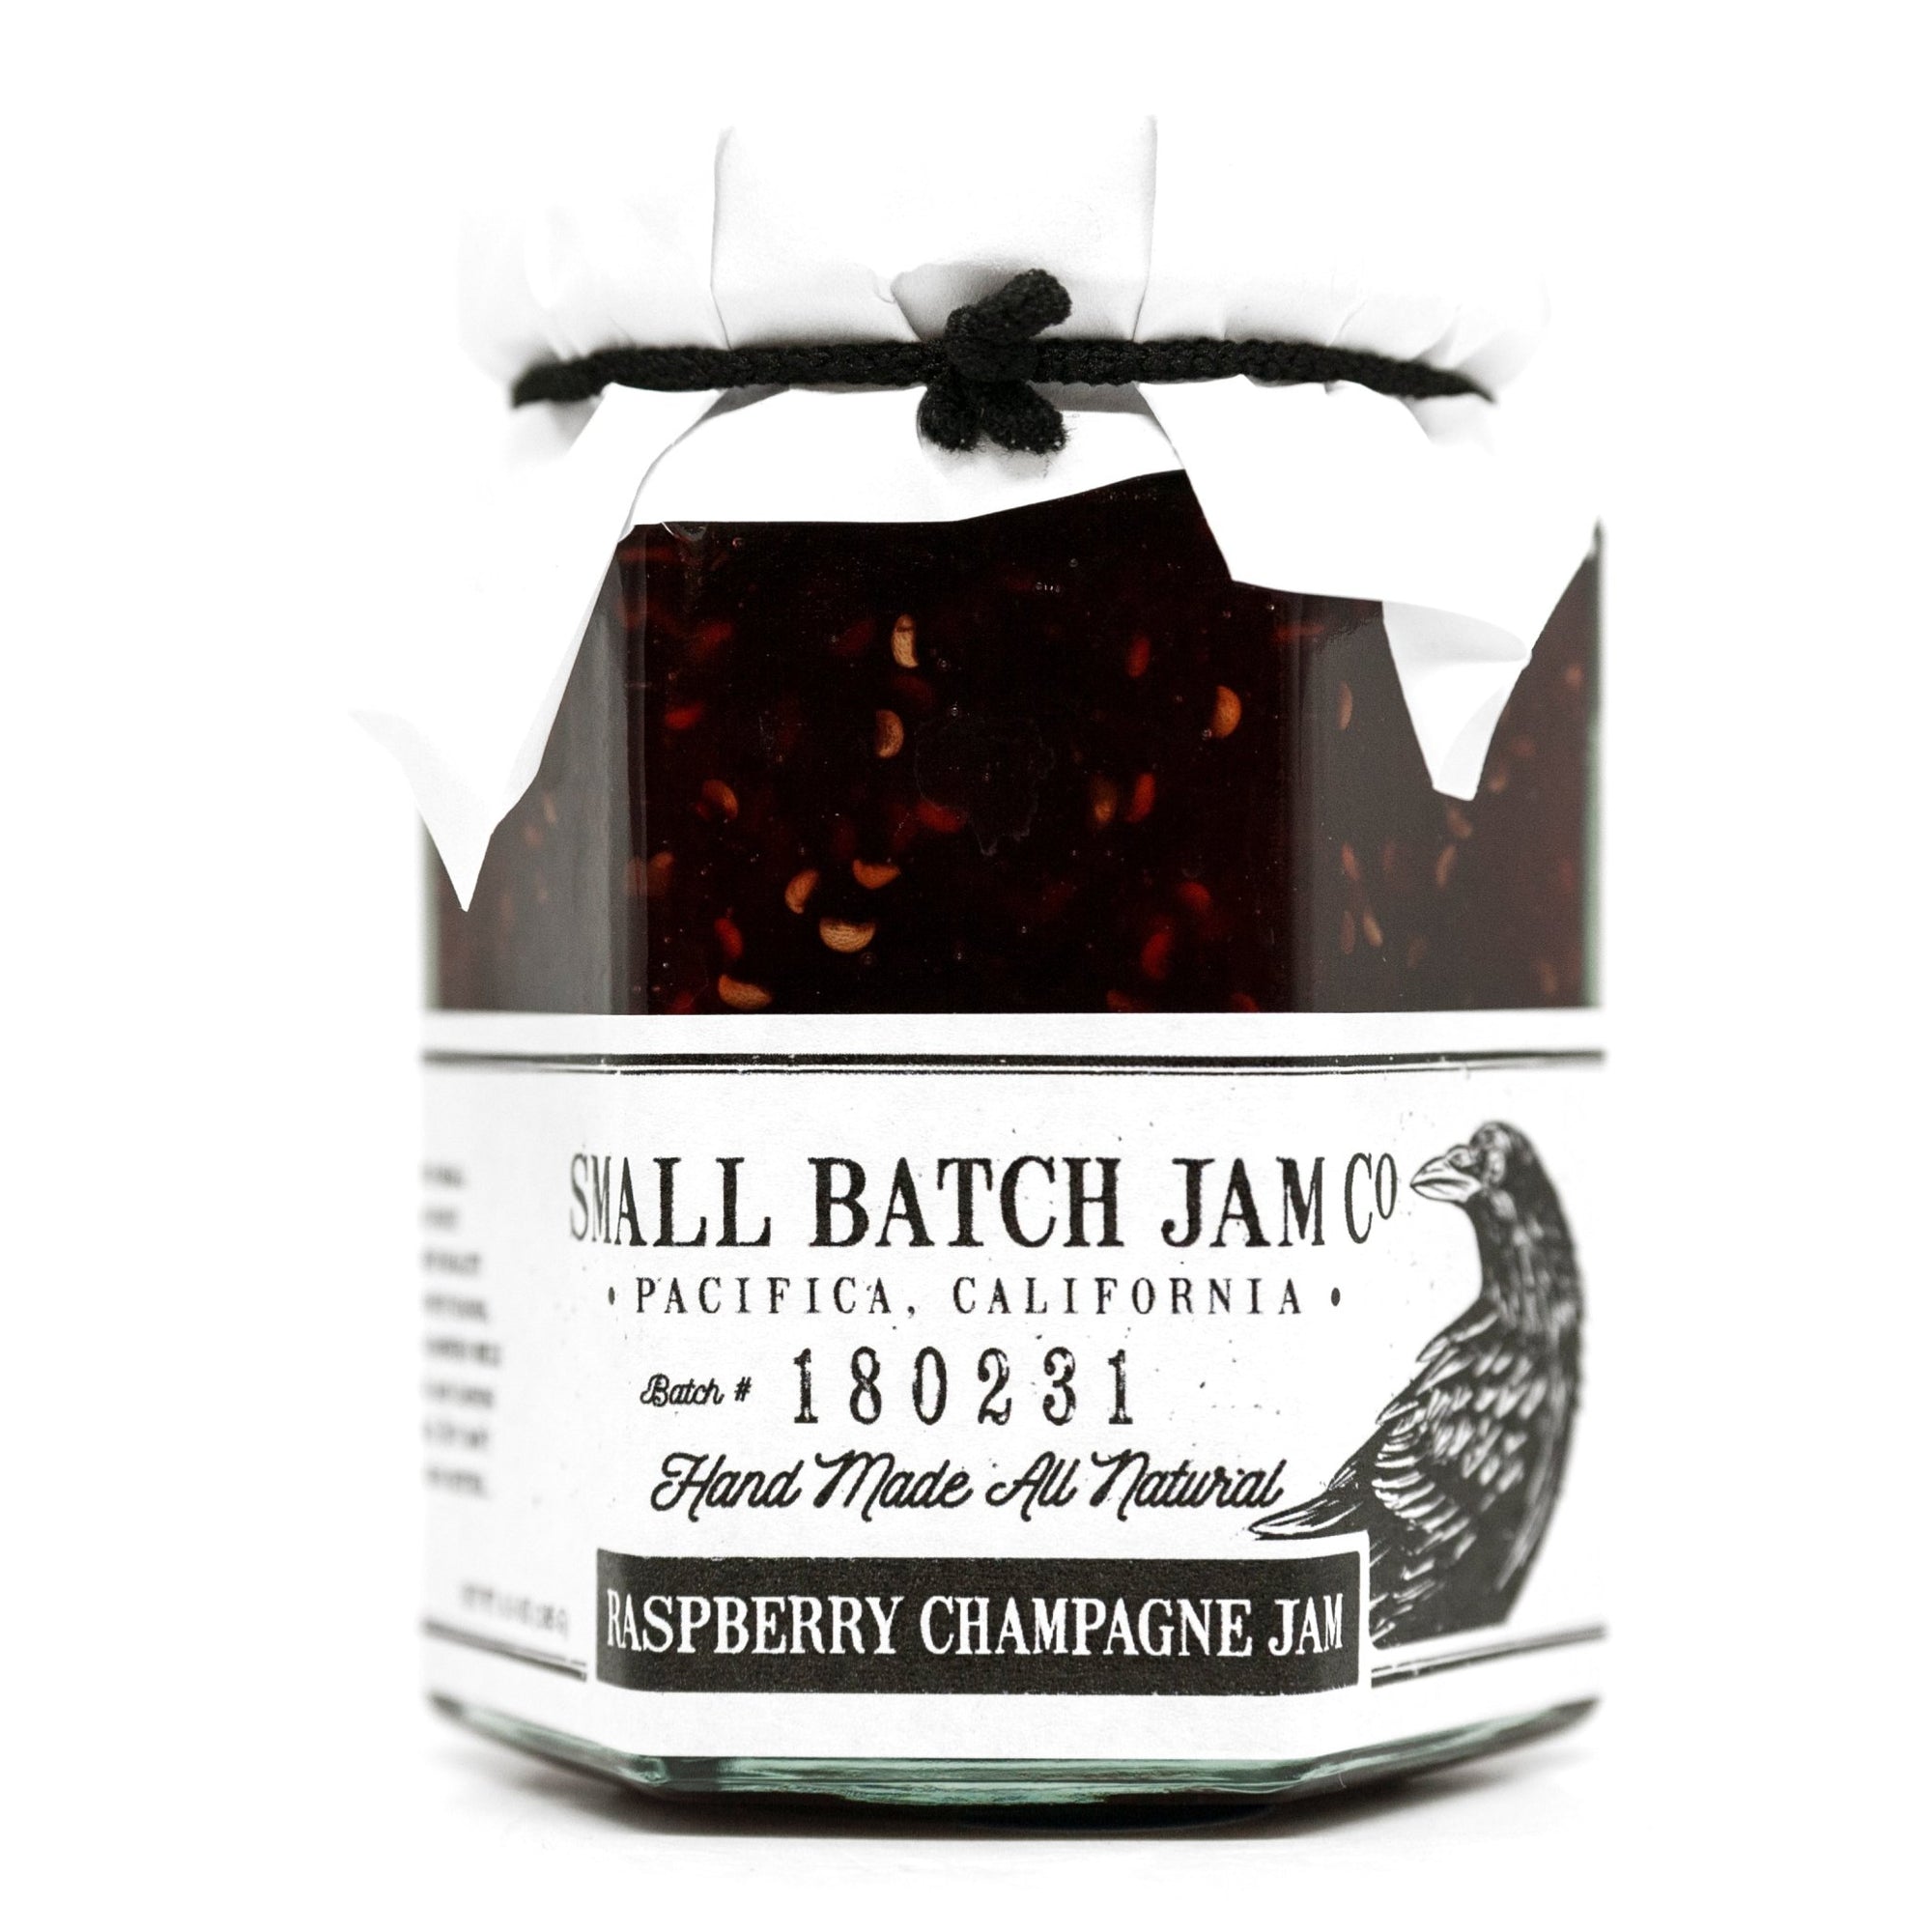 Raspberry Champagne Jam - Small Batch Jam Co